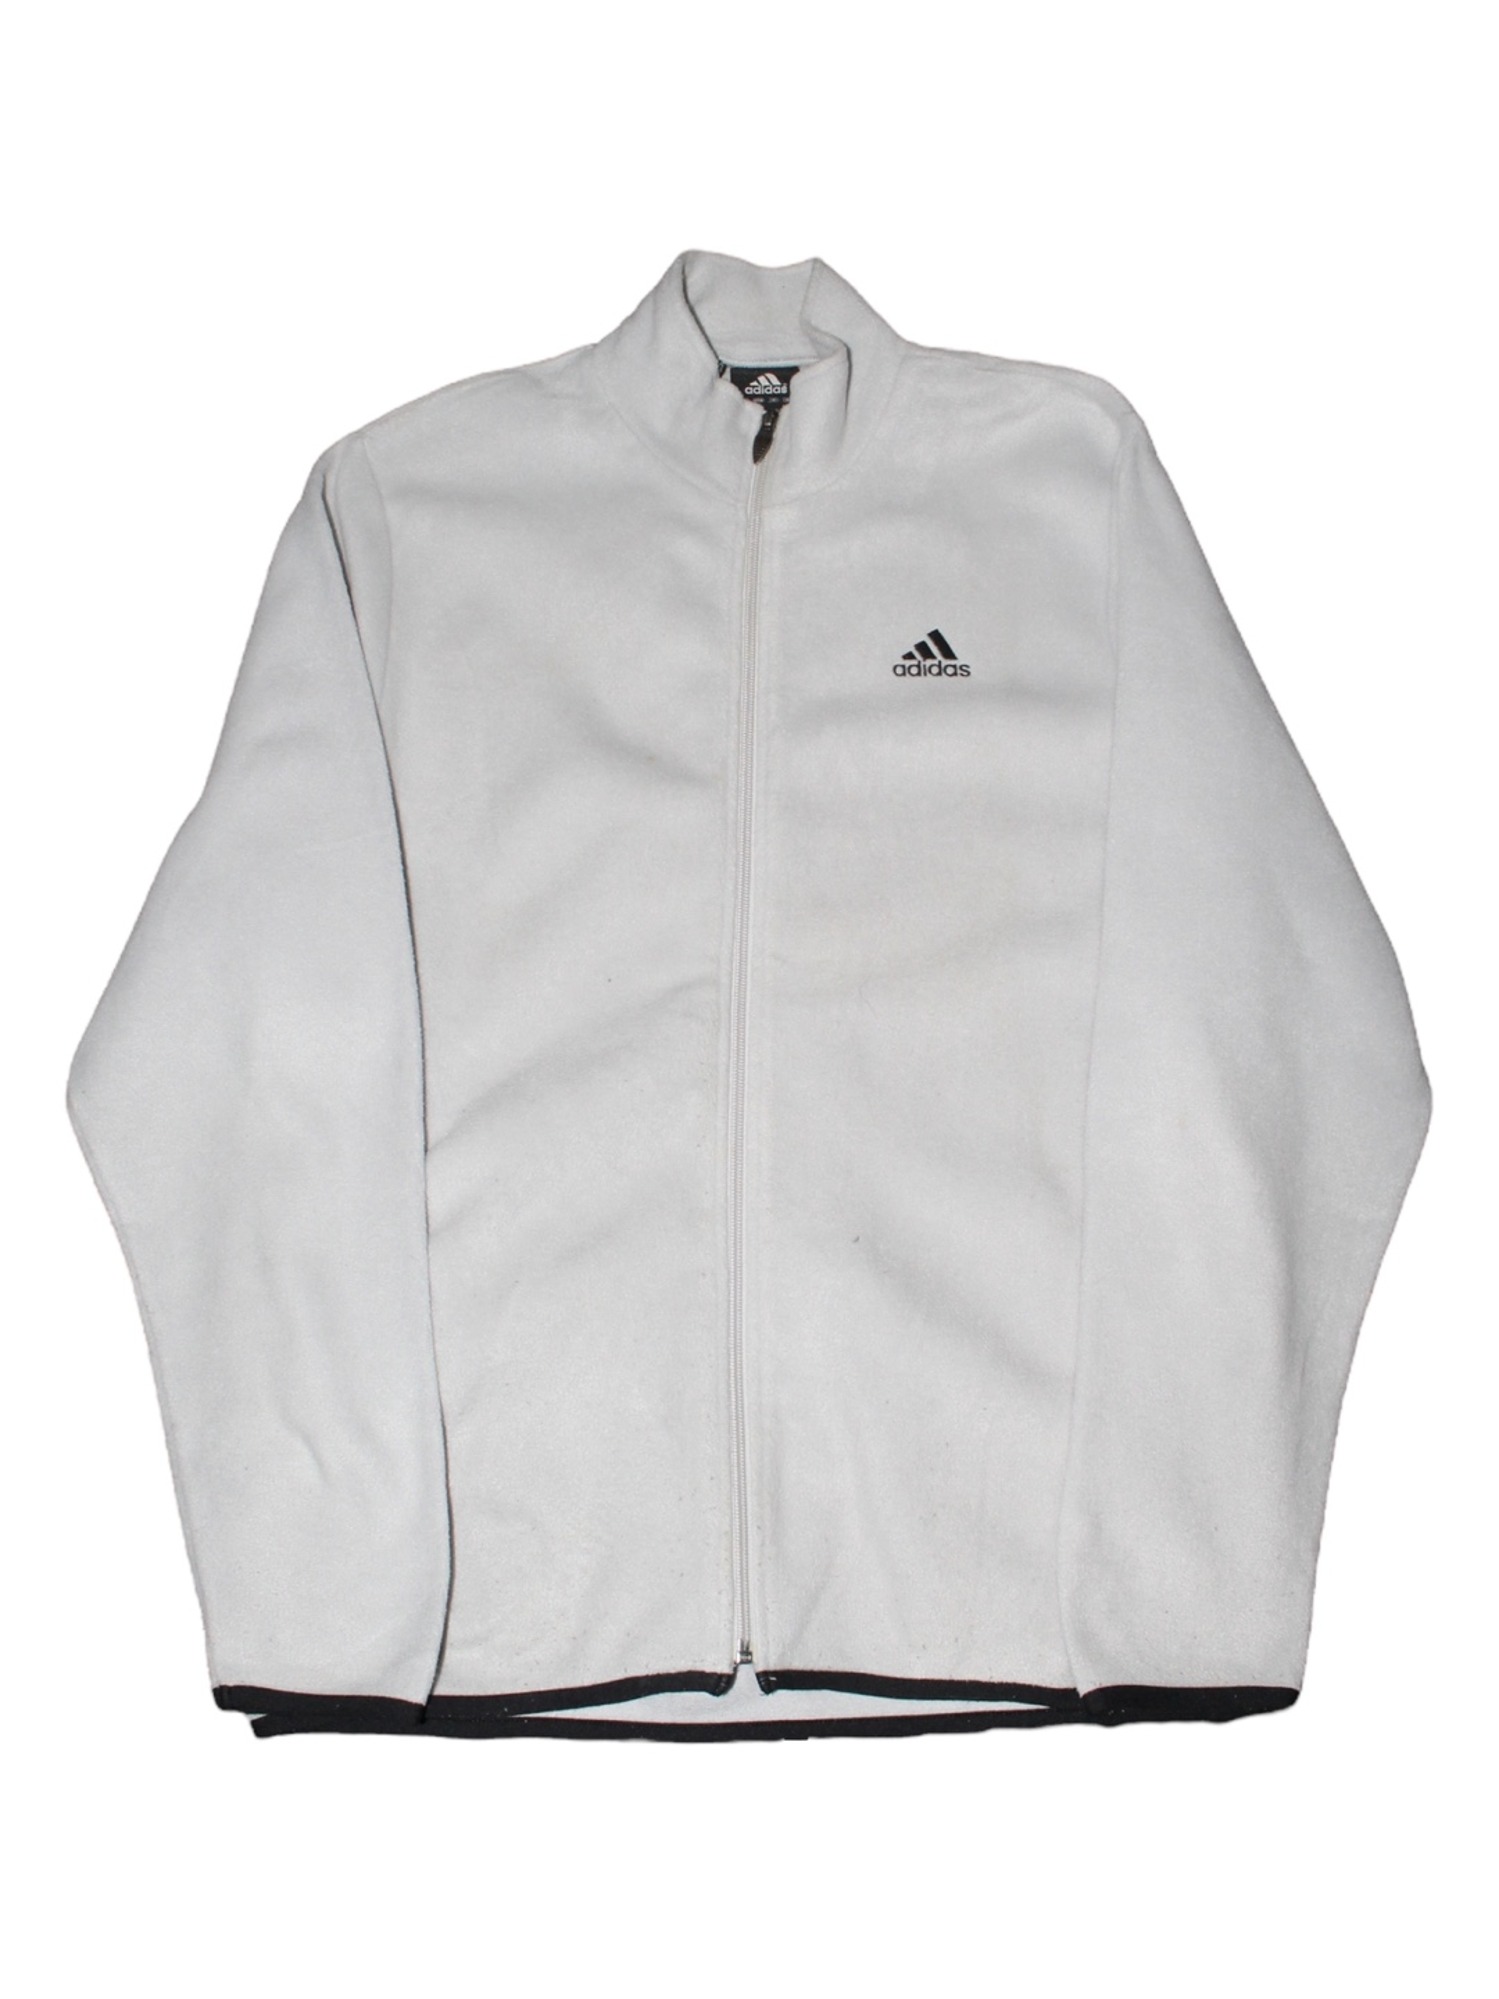 ADIDAS Grey Fleece Jacket